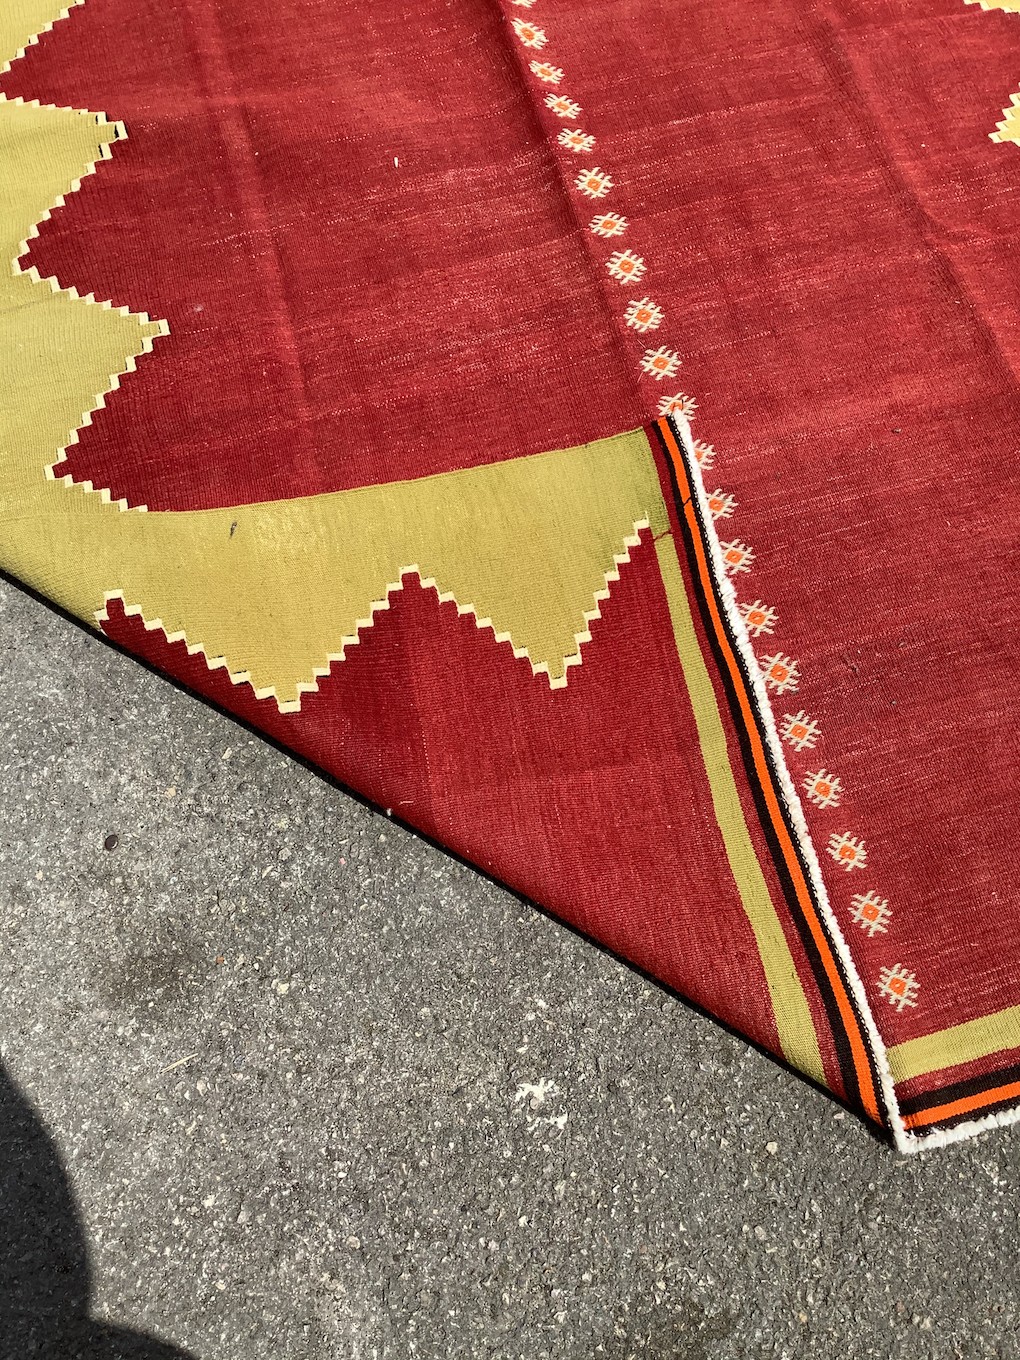 An Anatolian design polychrome Kilim flatweave carpet, 277 x 154cm